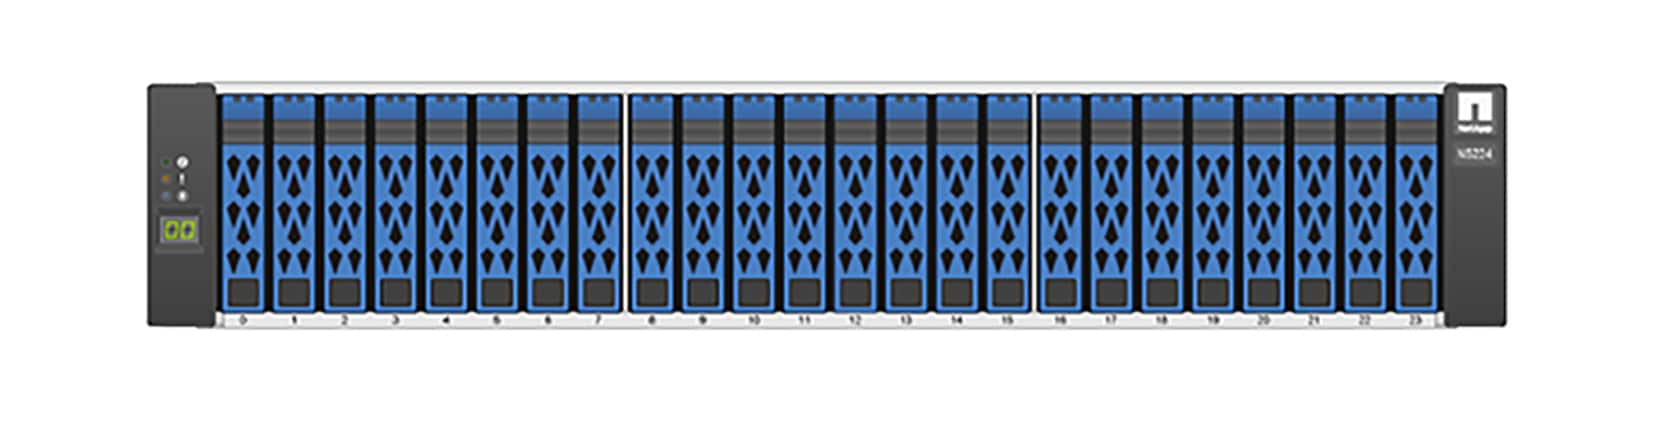 NetApp NS224 - storage enclosure